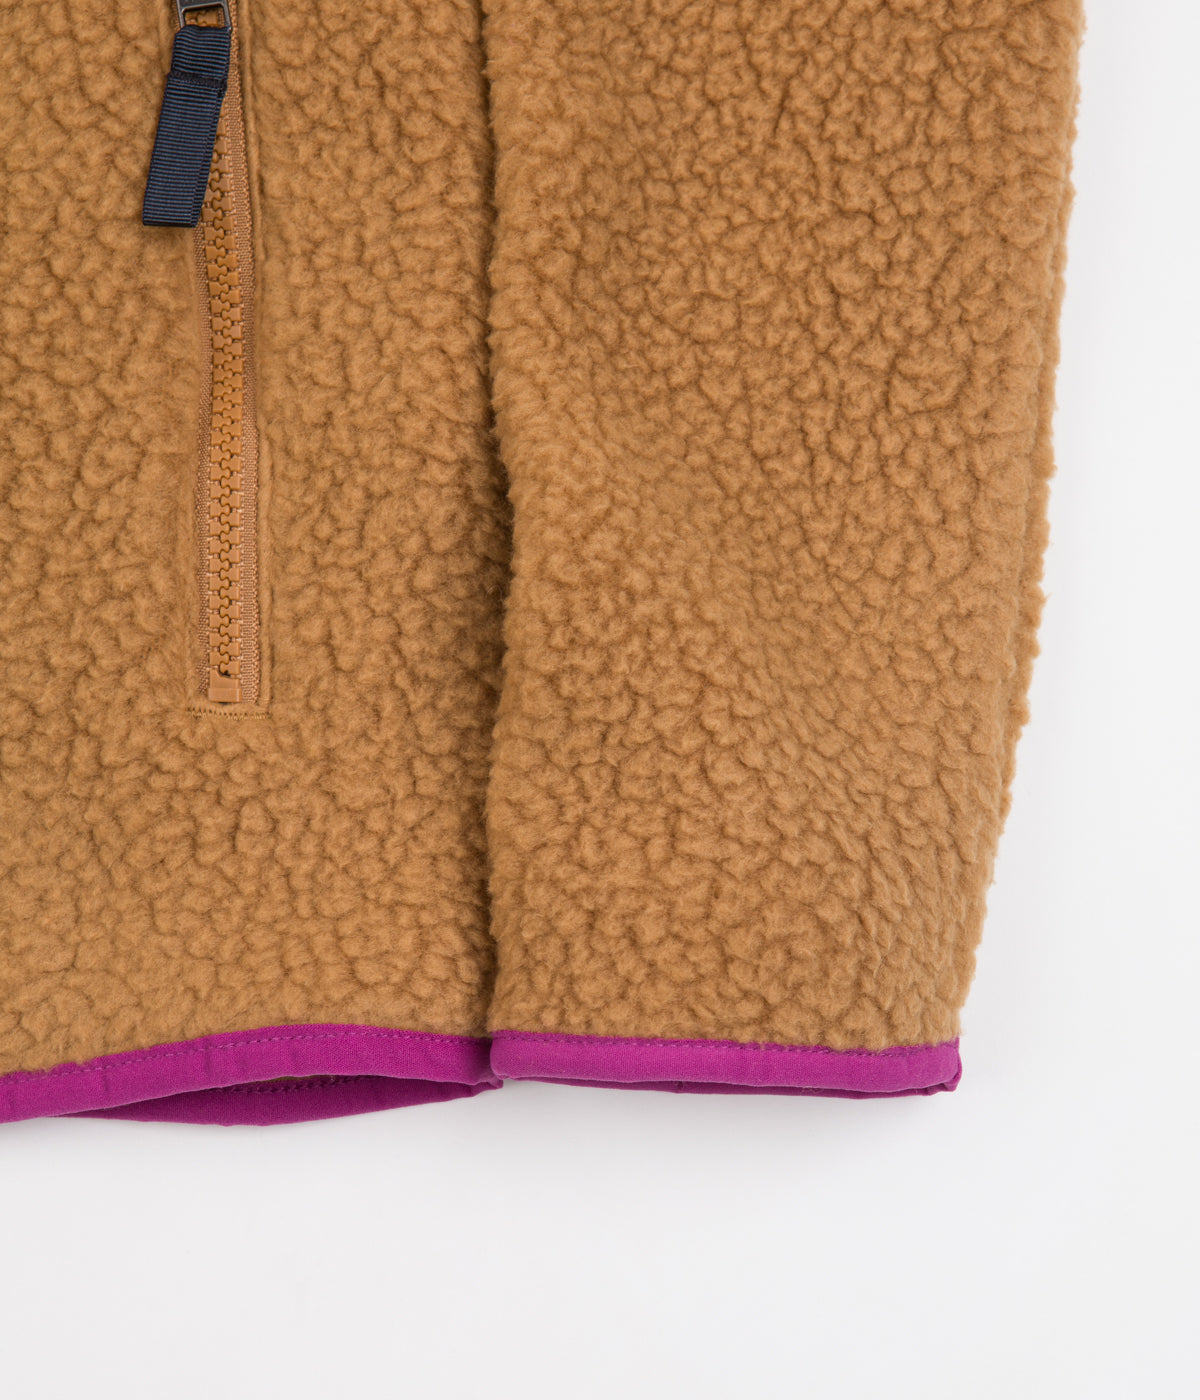 Patagonia Women's Retro Pile Fleece Jacket - Nest Brown